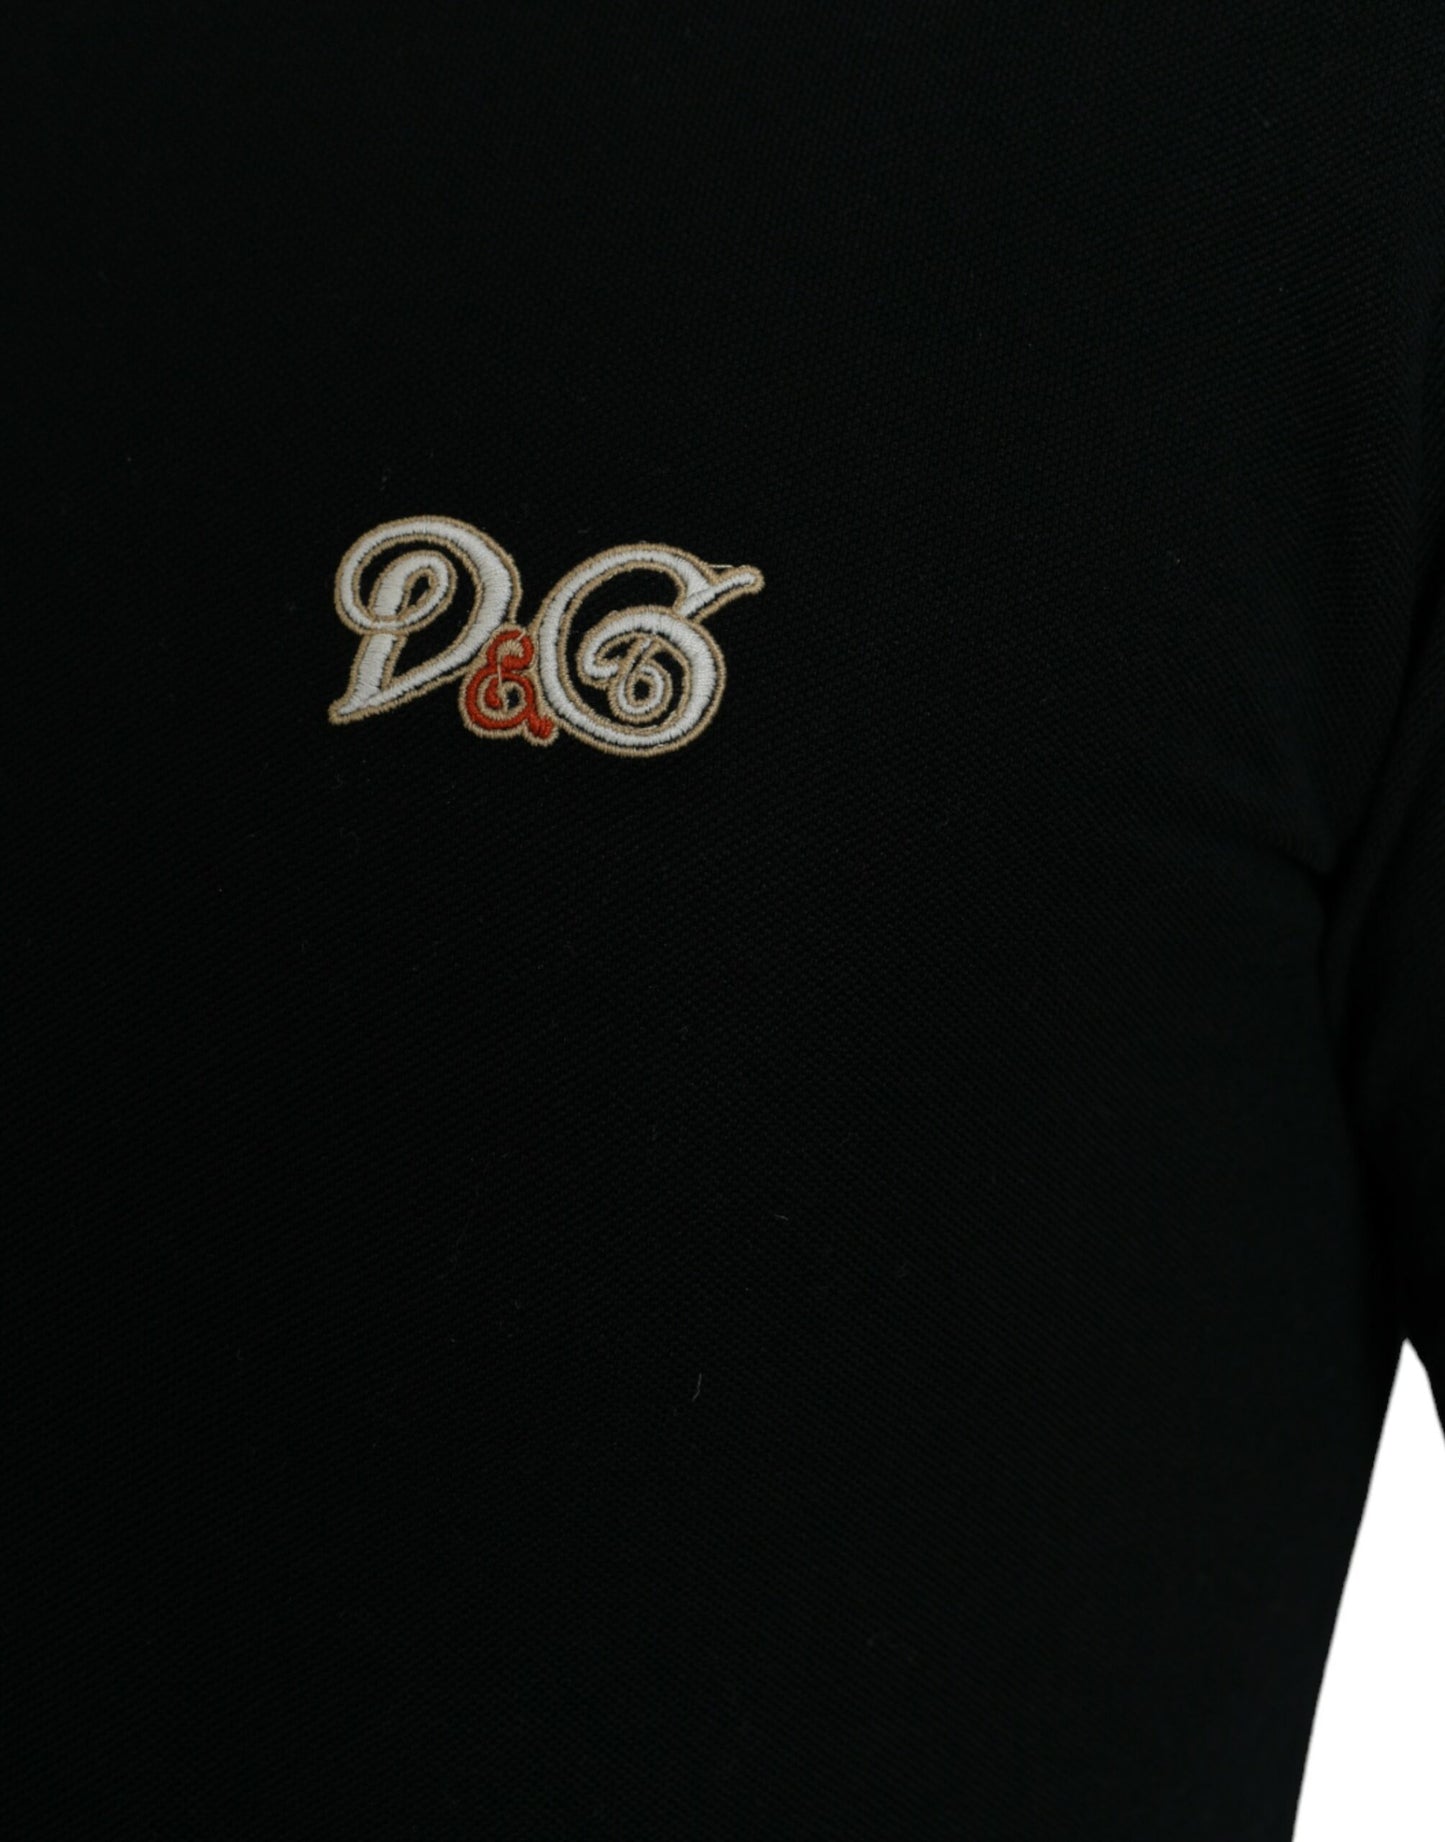 Dolce & Gabbana Black Logo Collared Short Sleeves Polo T-shirt